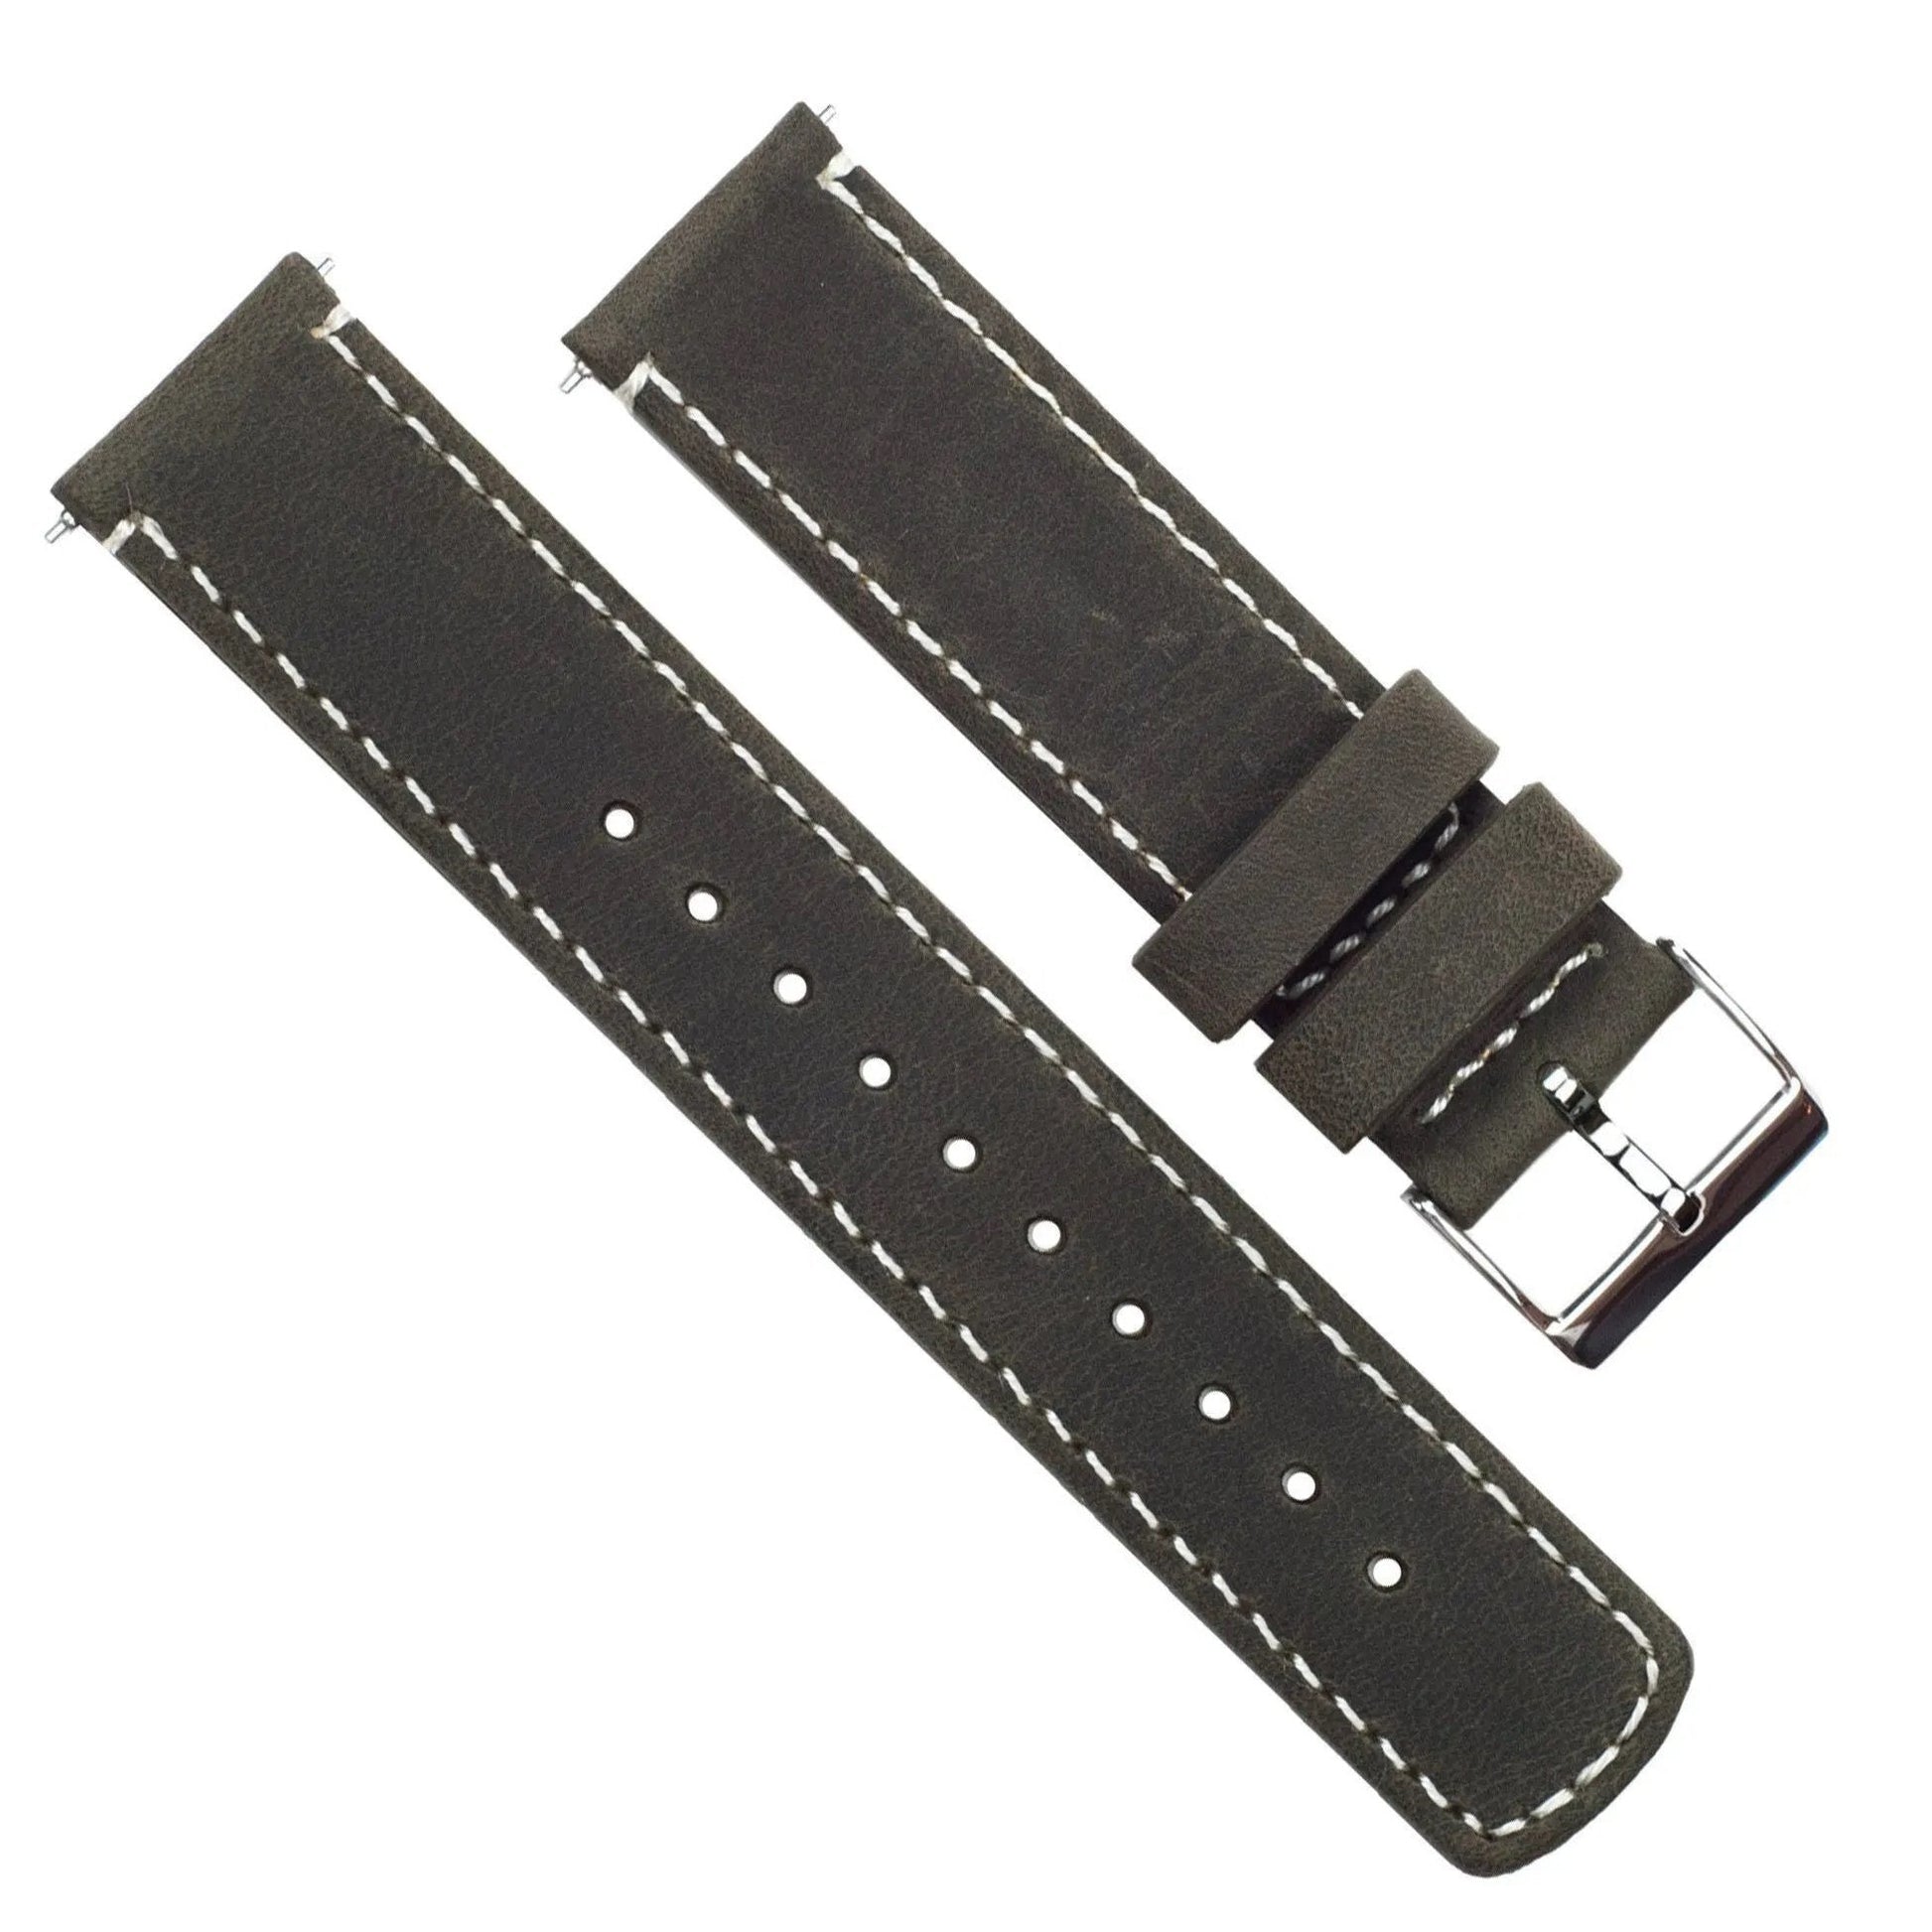 MOONSWATCH Bip | Espresso Brown Leather & Linen White Stitching - Barton Watch Bands